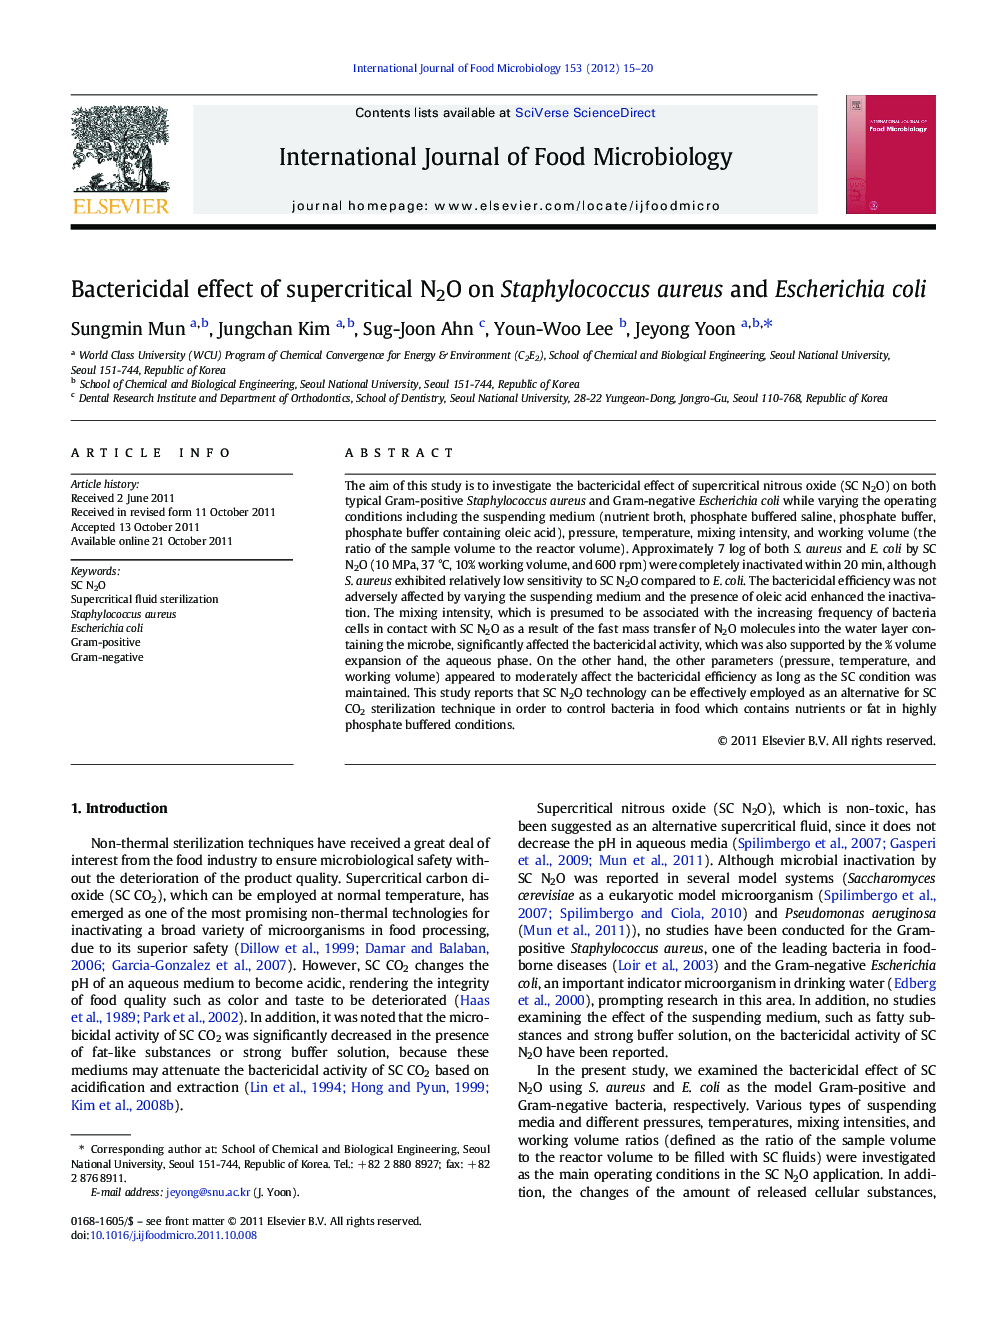 Bactericidal effect of supercritical N2O on Staphylococcus aureus and Escherichia coli